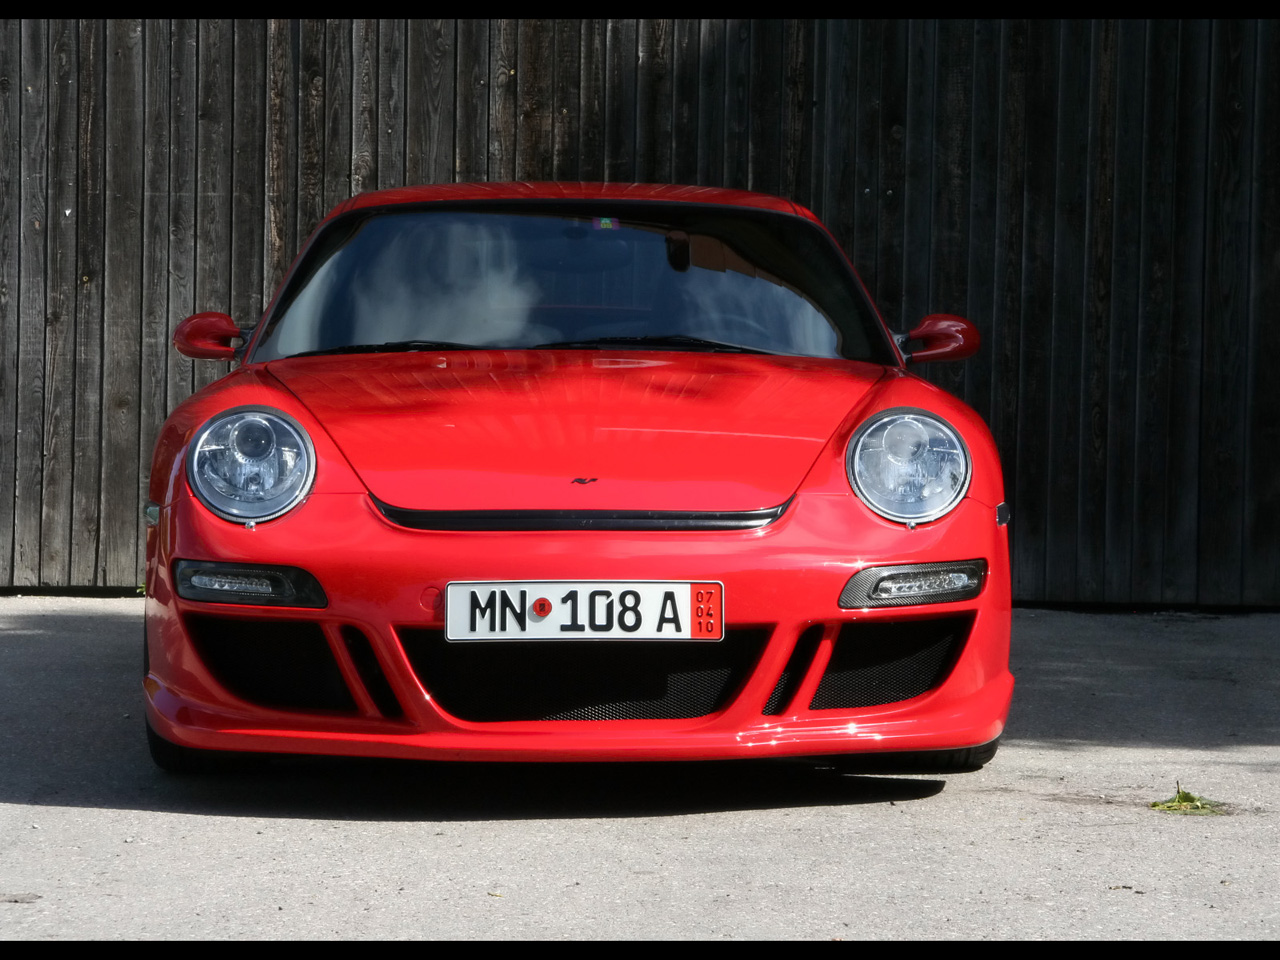 2009 RUF Rt 12 S based on Porsche 911 Turbo